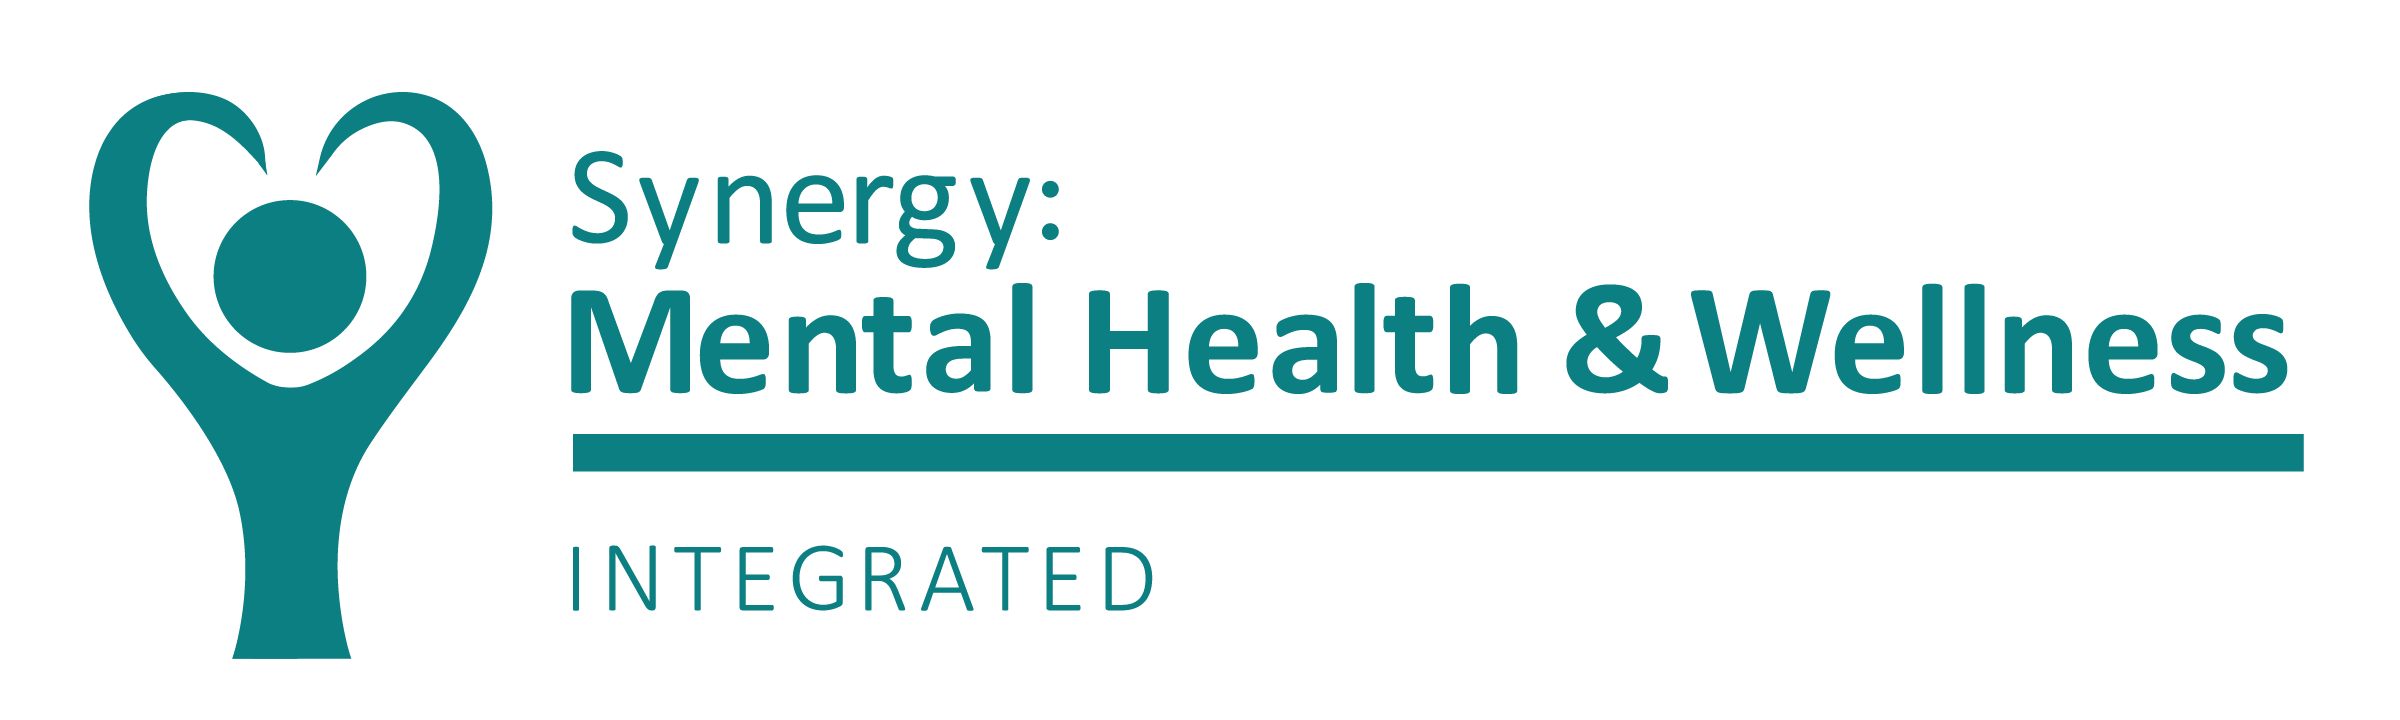 Synergy Mental Health & Wellness: Premier Psychiatric Services